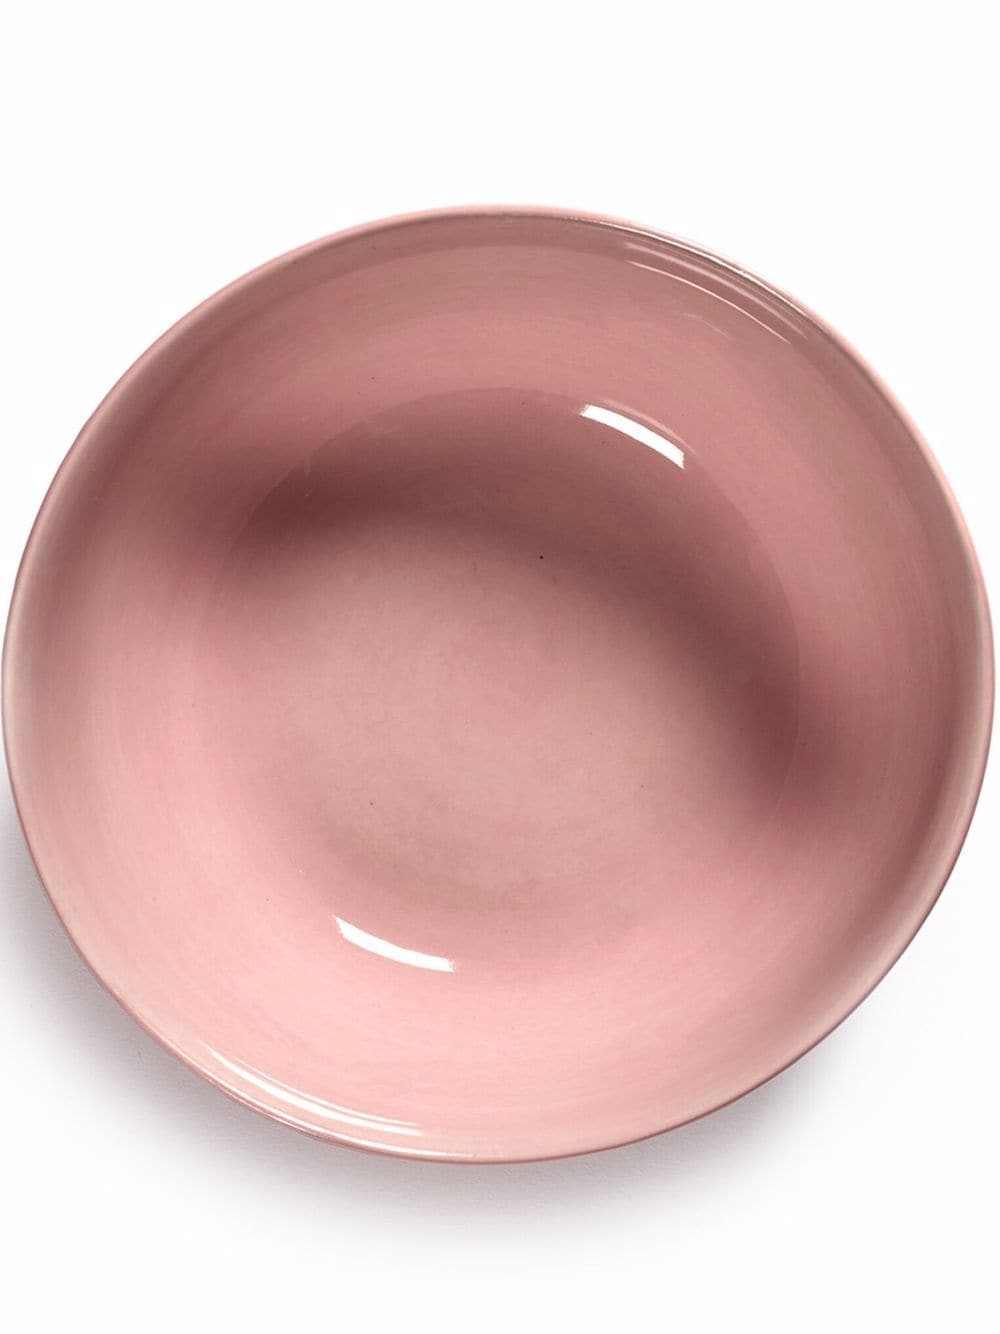 Serax x Ottolenghi Feast bowl - Pink von Serax